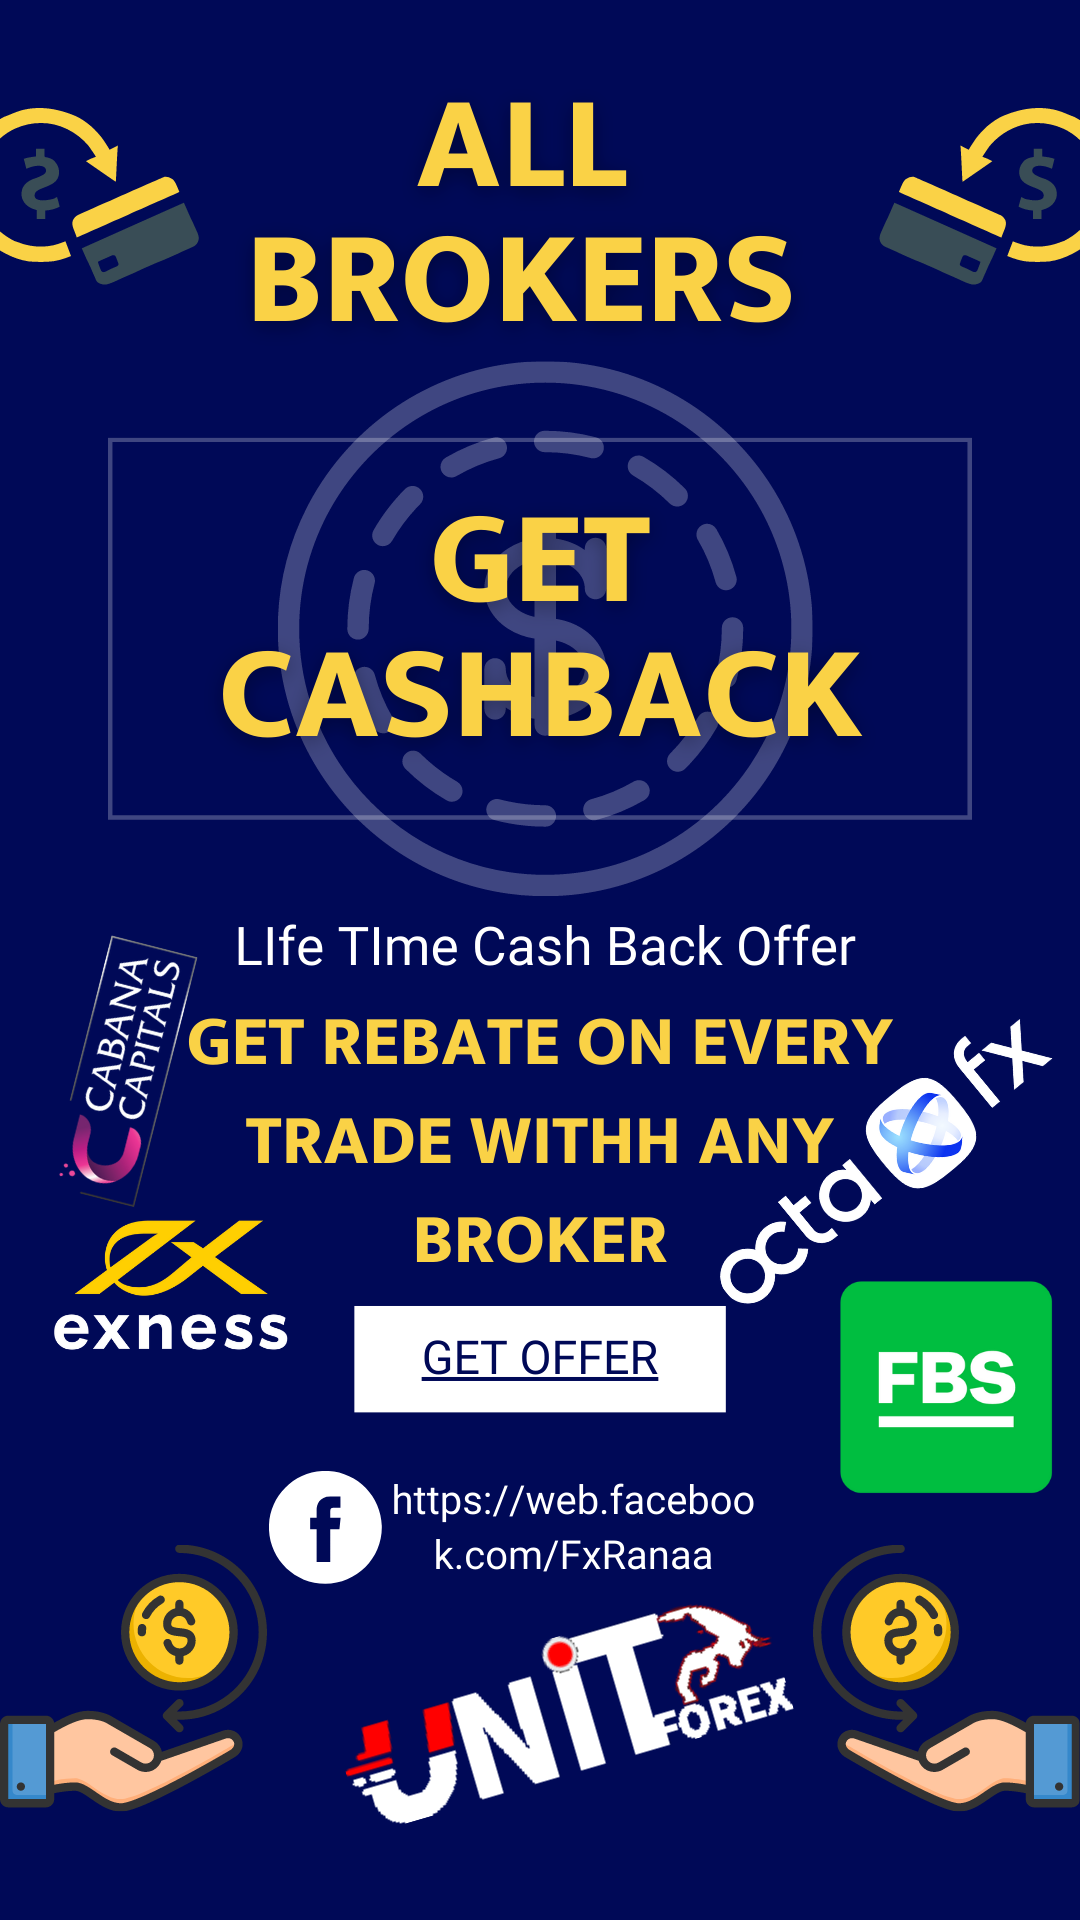 ALL broker cashback offer. rebate offer, get rebate, trading, deposit, bonus, forex broker, no requote, no deposit bonus, deposit bonus, visa, mastercard